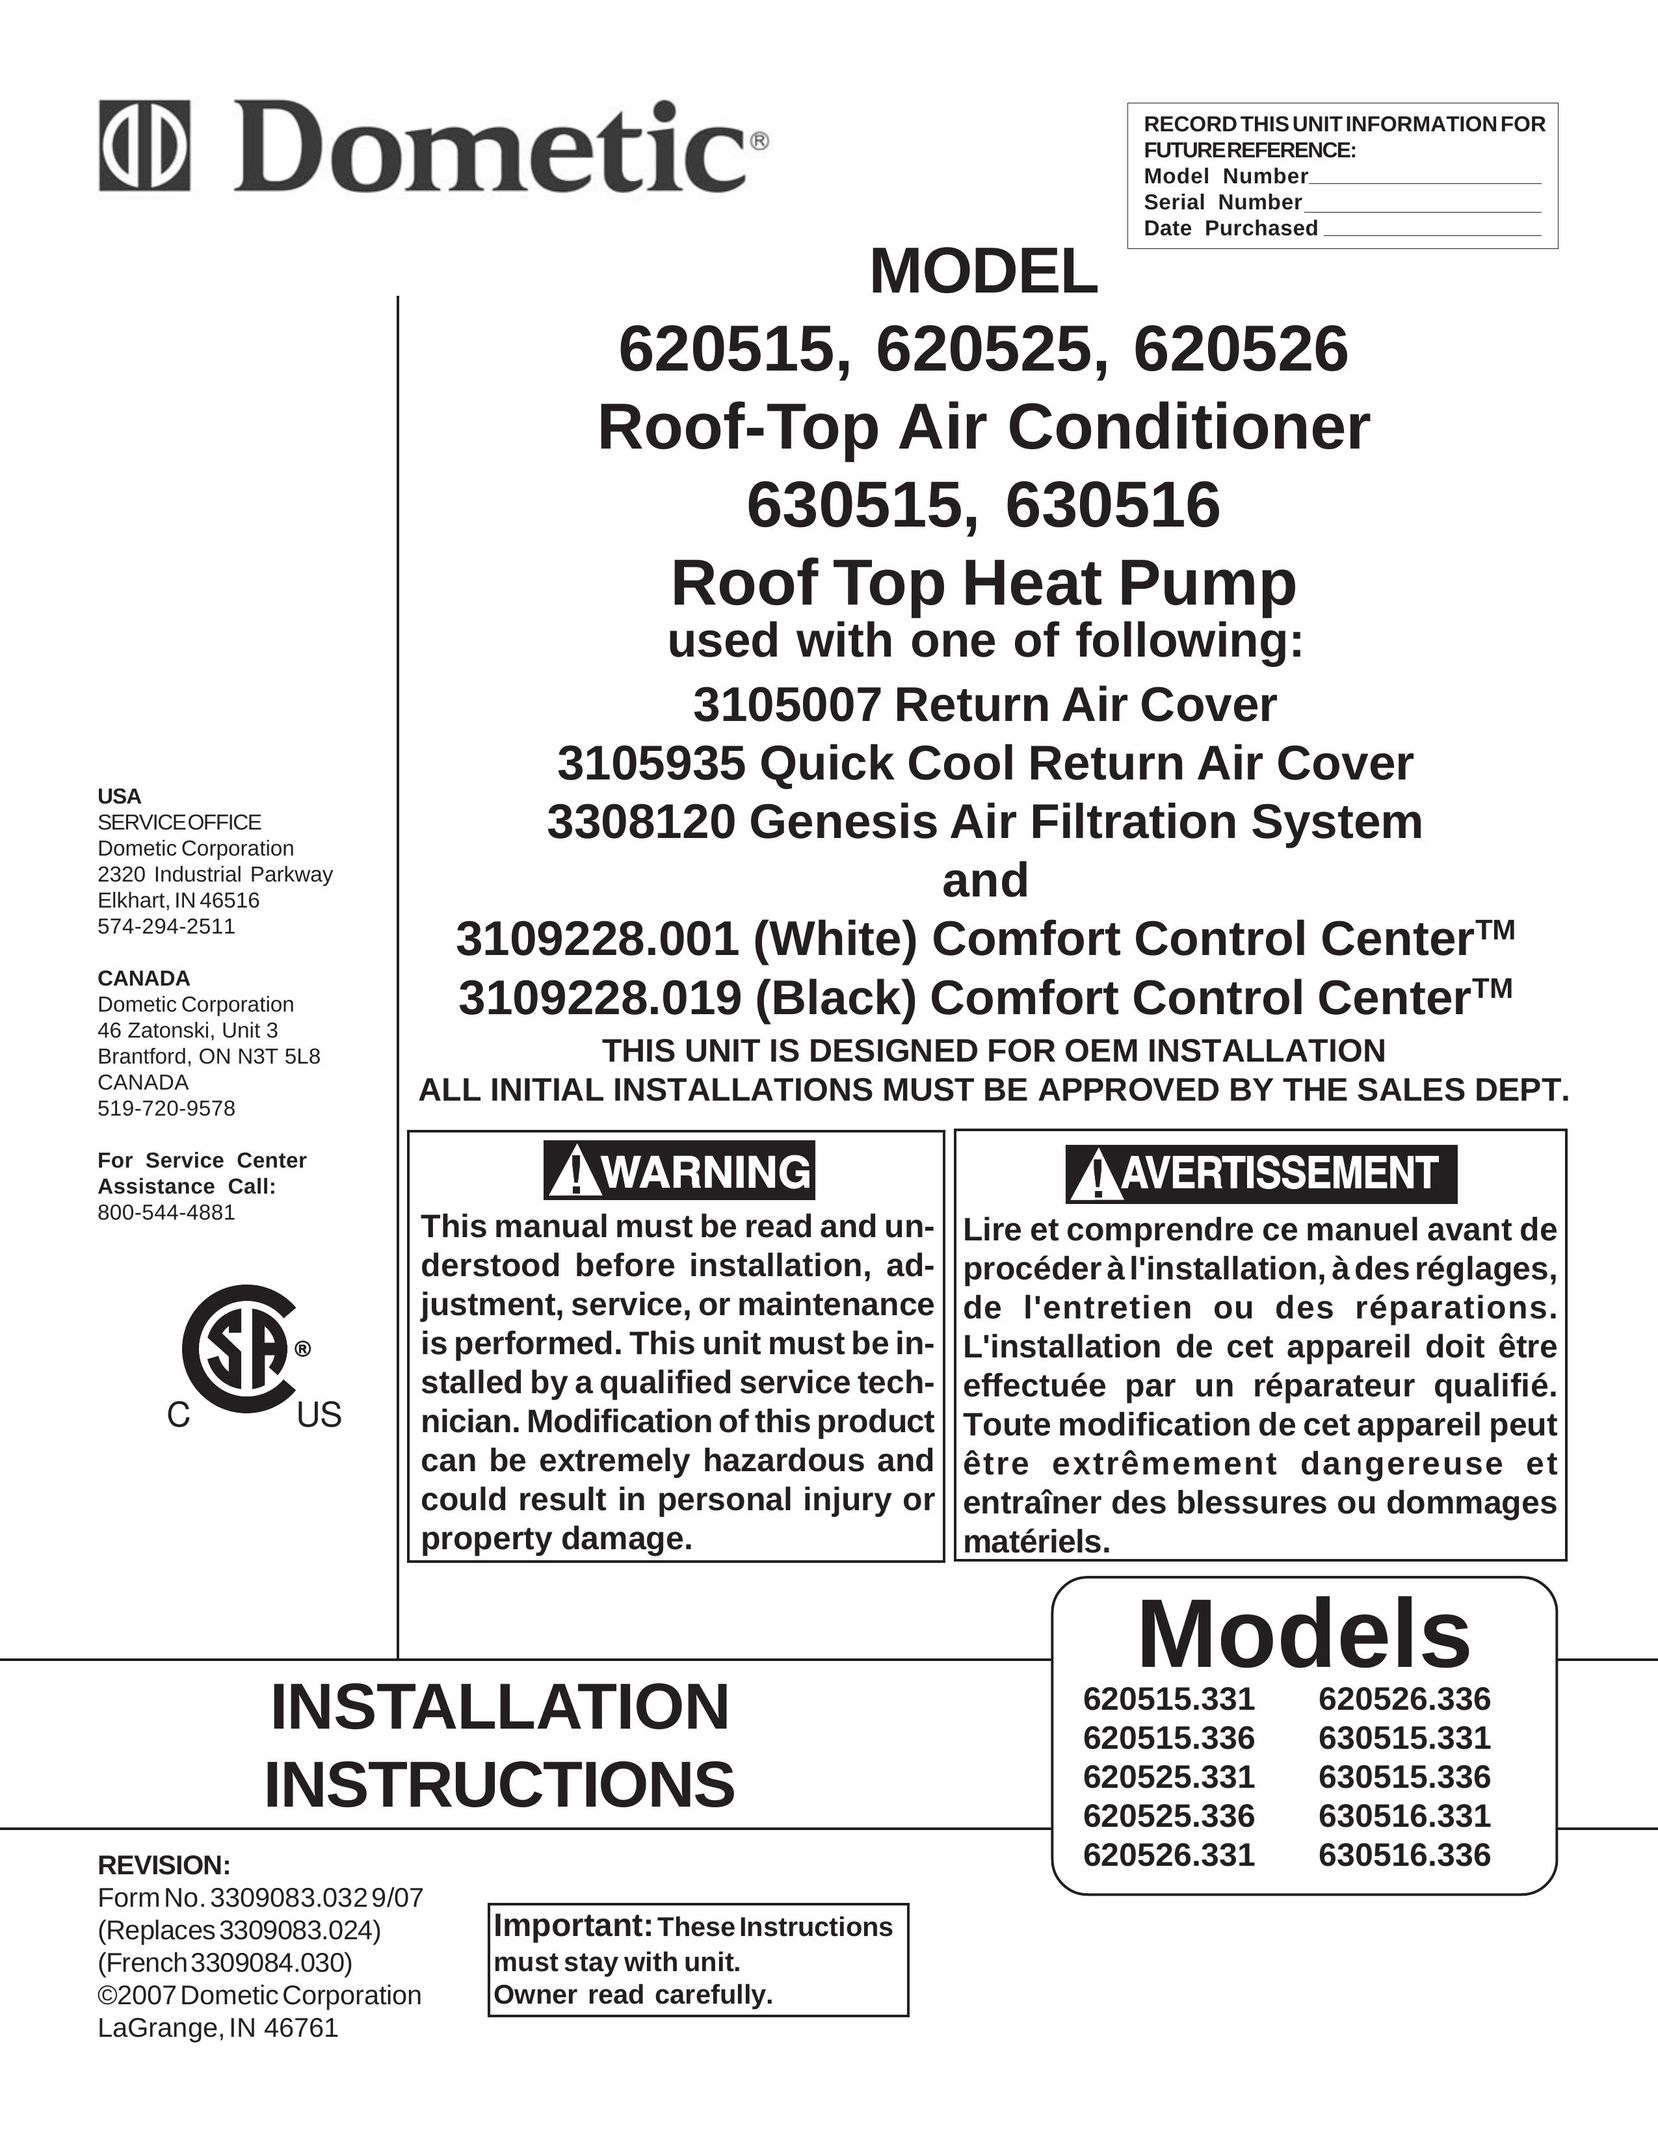 Dometic 620526.331 Air Conditioner User Manual